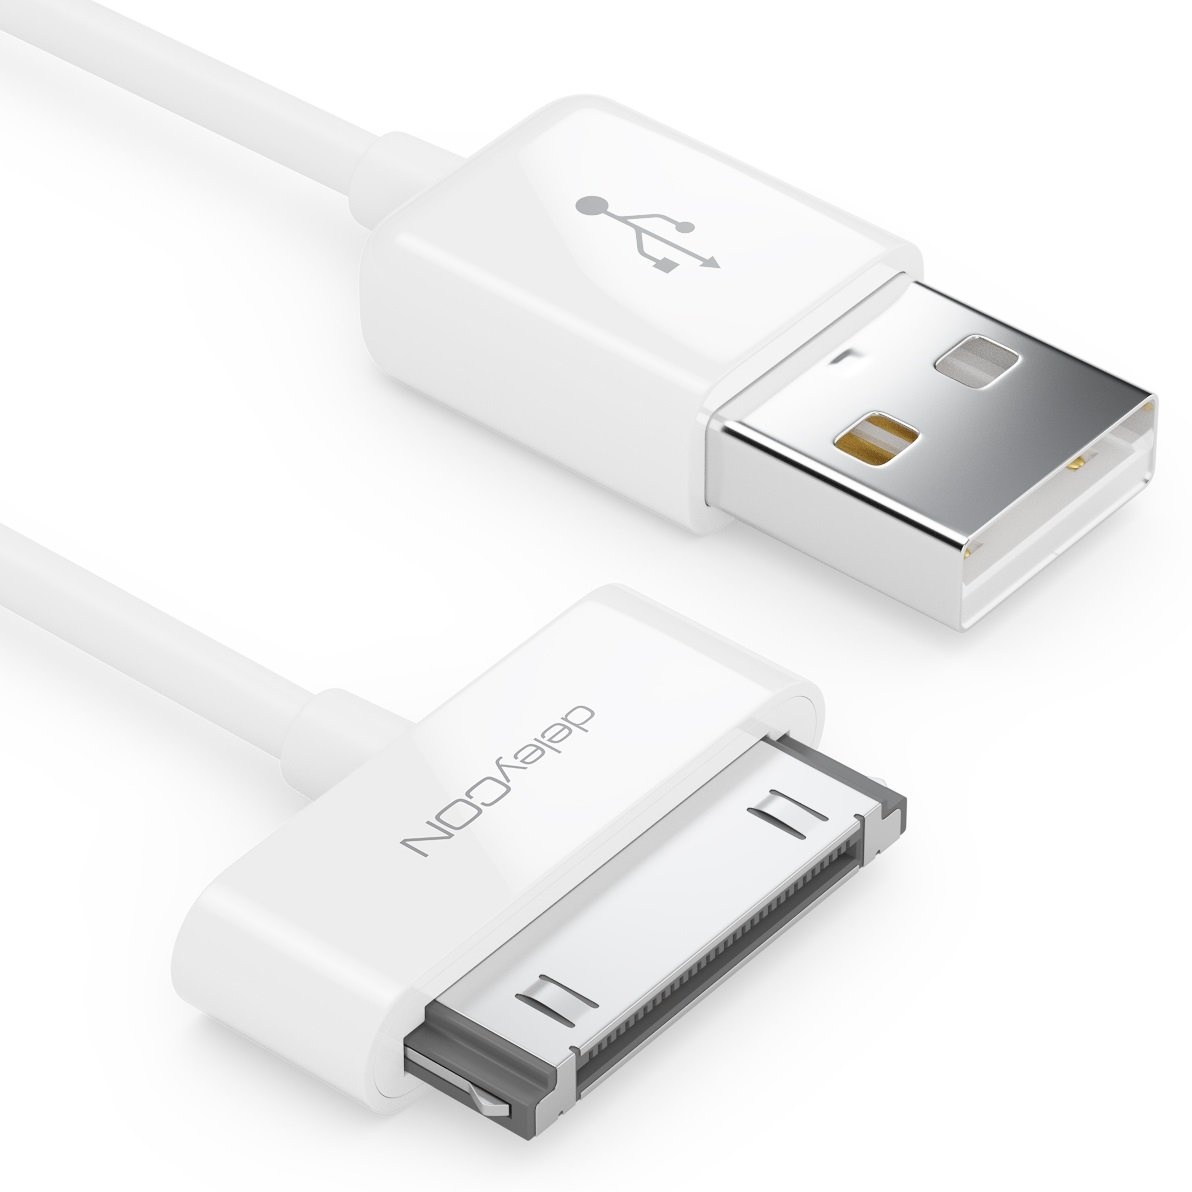 deleyCON 0,5m 30-Pin USB Kabel Dock Connector Sync-Kabel Ladekabel Datenkabel Kompatibel mit iPhone 4s 4 3Gs 3G iPad iPod - Weiß